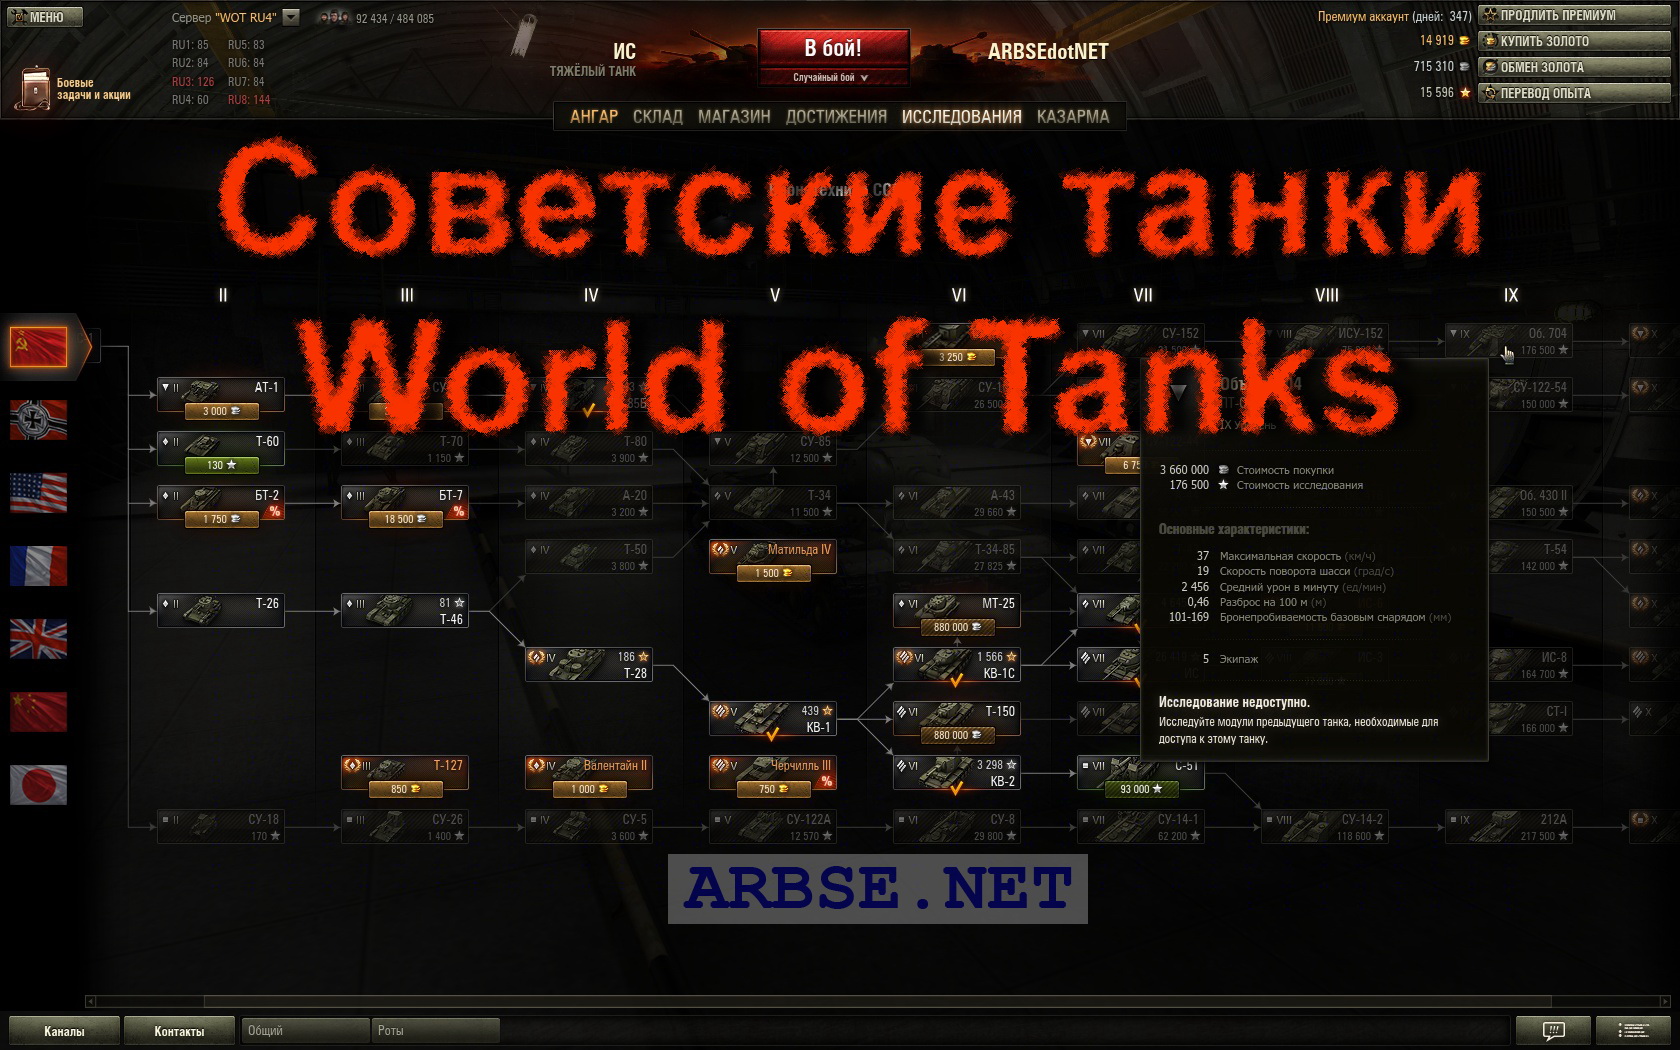 World of tanks перевести